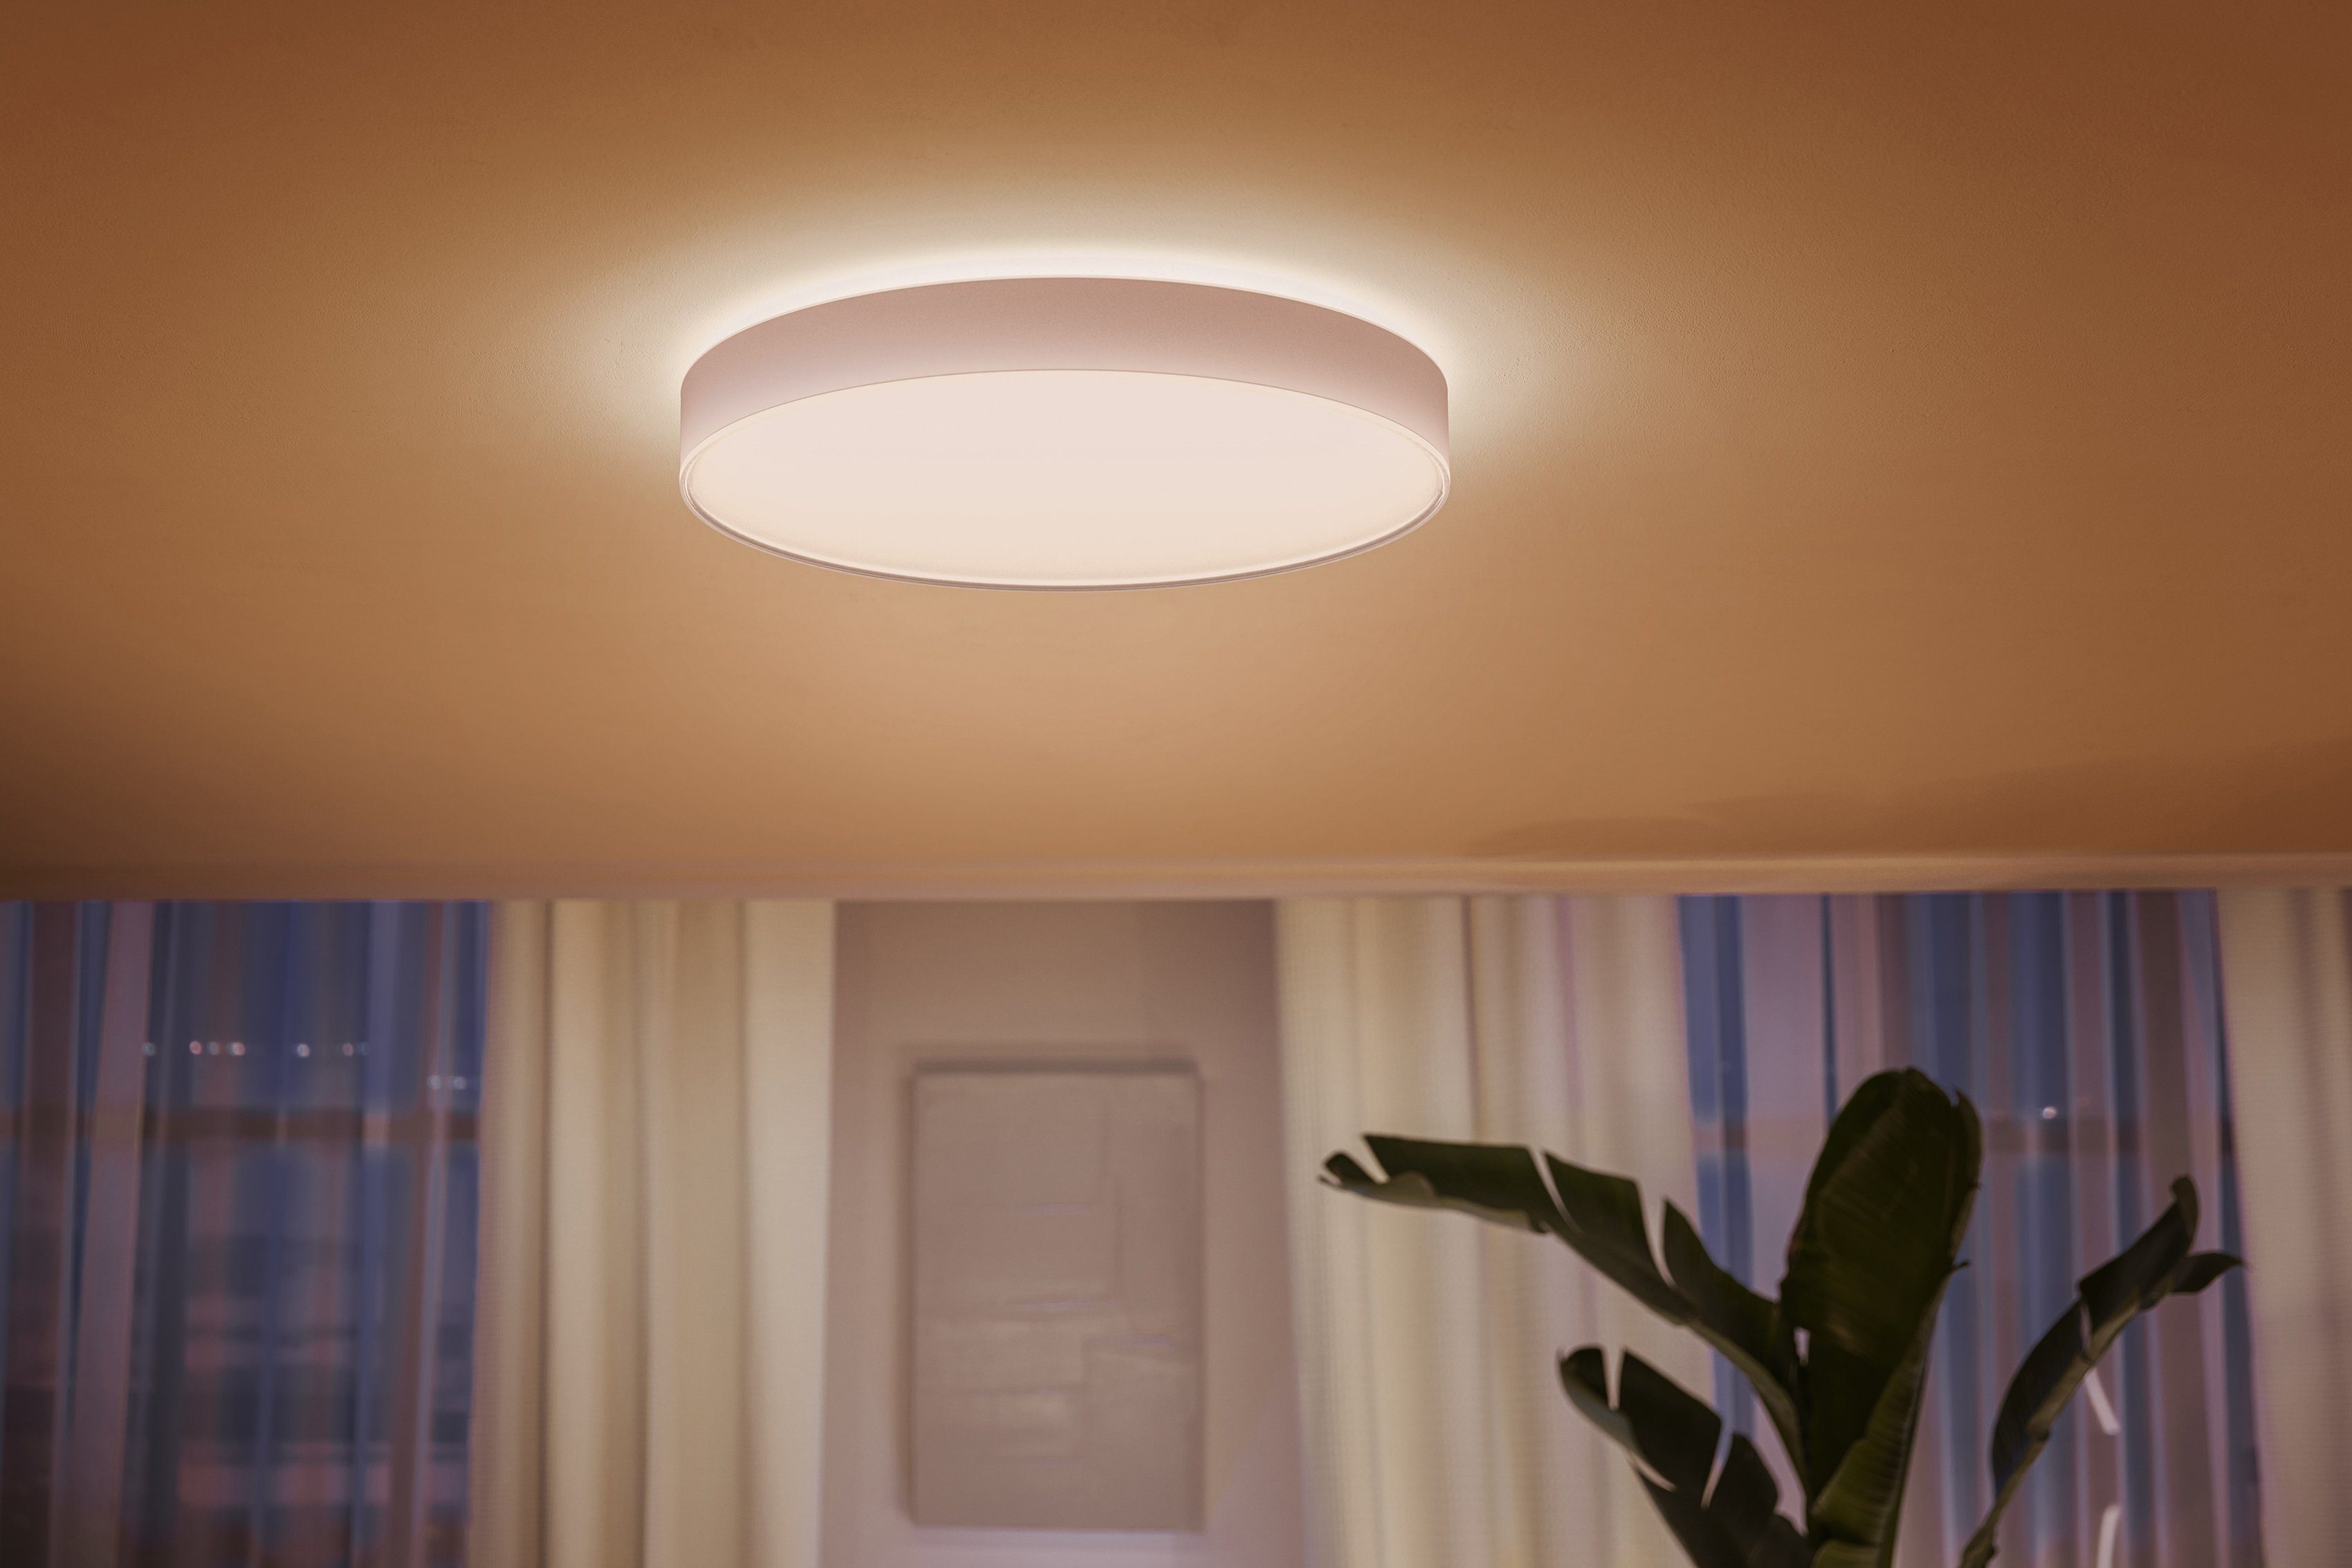 LED Philips LED Deckenleuchte fest Enrave, Hue integriert, Dimmfunktion, Warmweiß